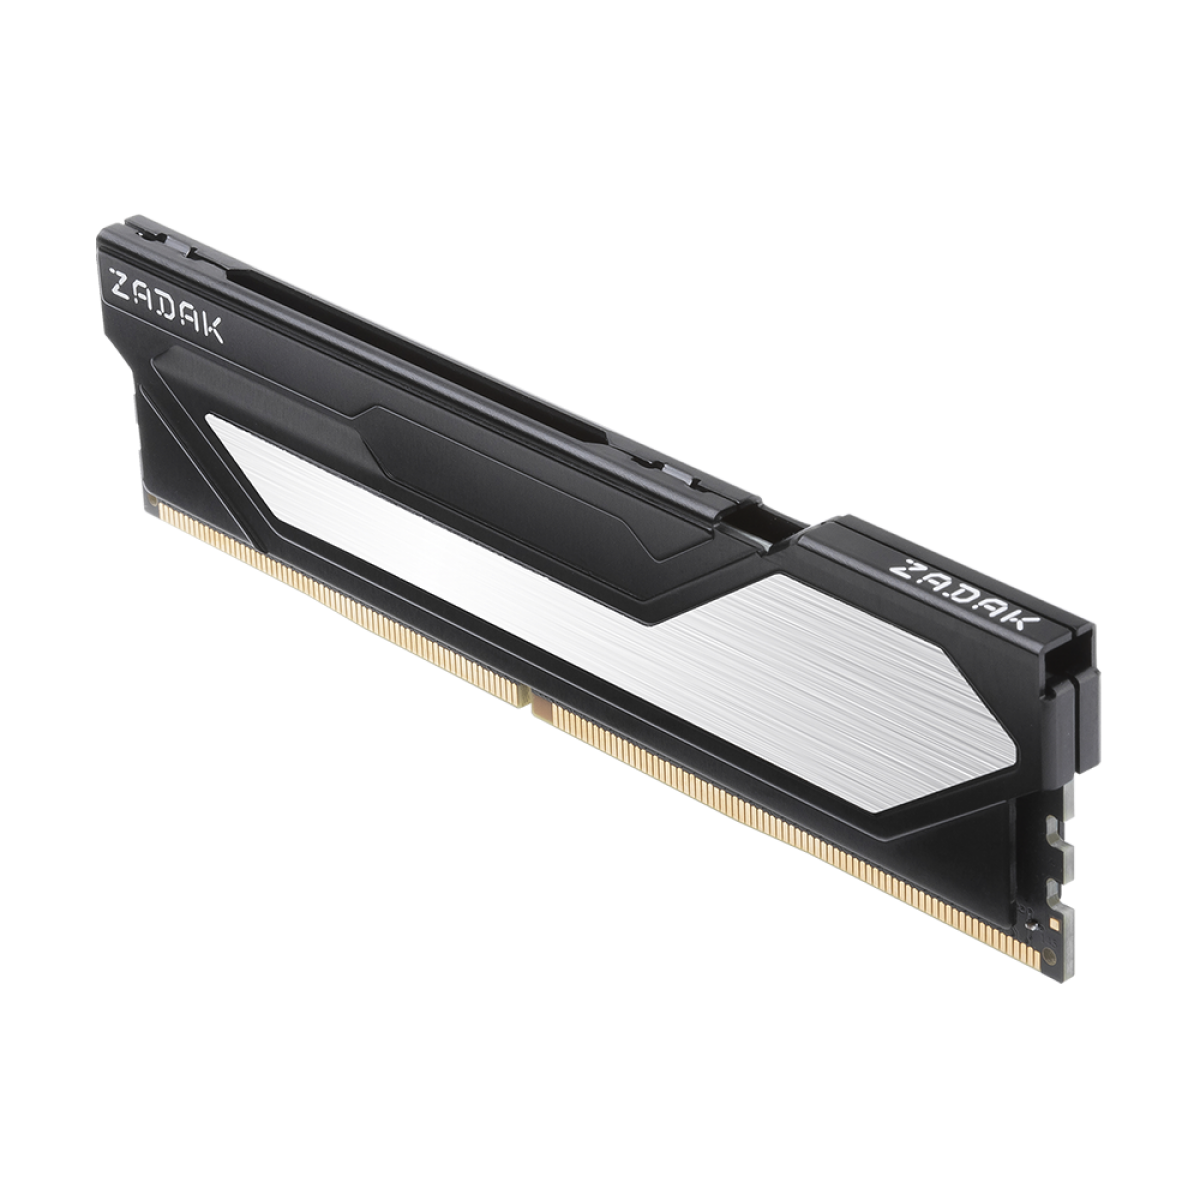 Memória DDR4 Zadak Twist, Black, 16GB, 3000MHz, ZD4-TWS30C08-16GYB1